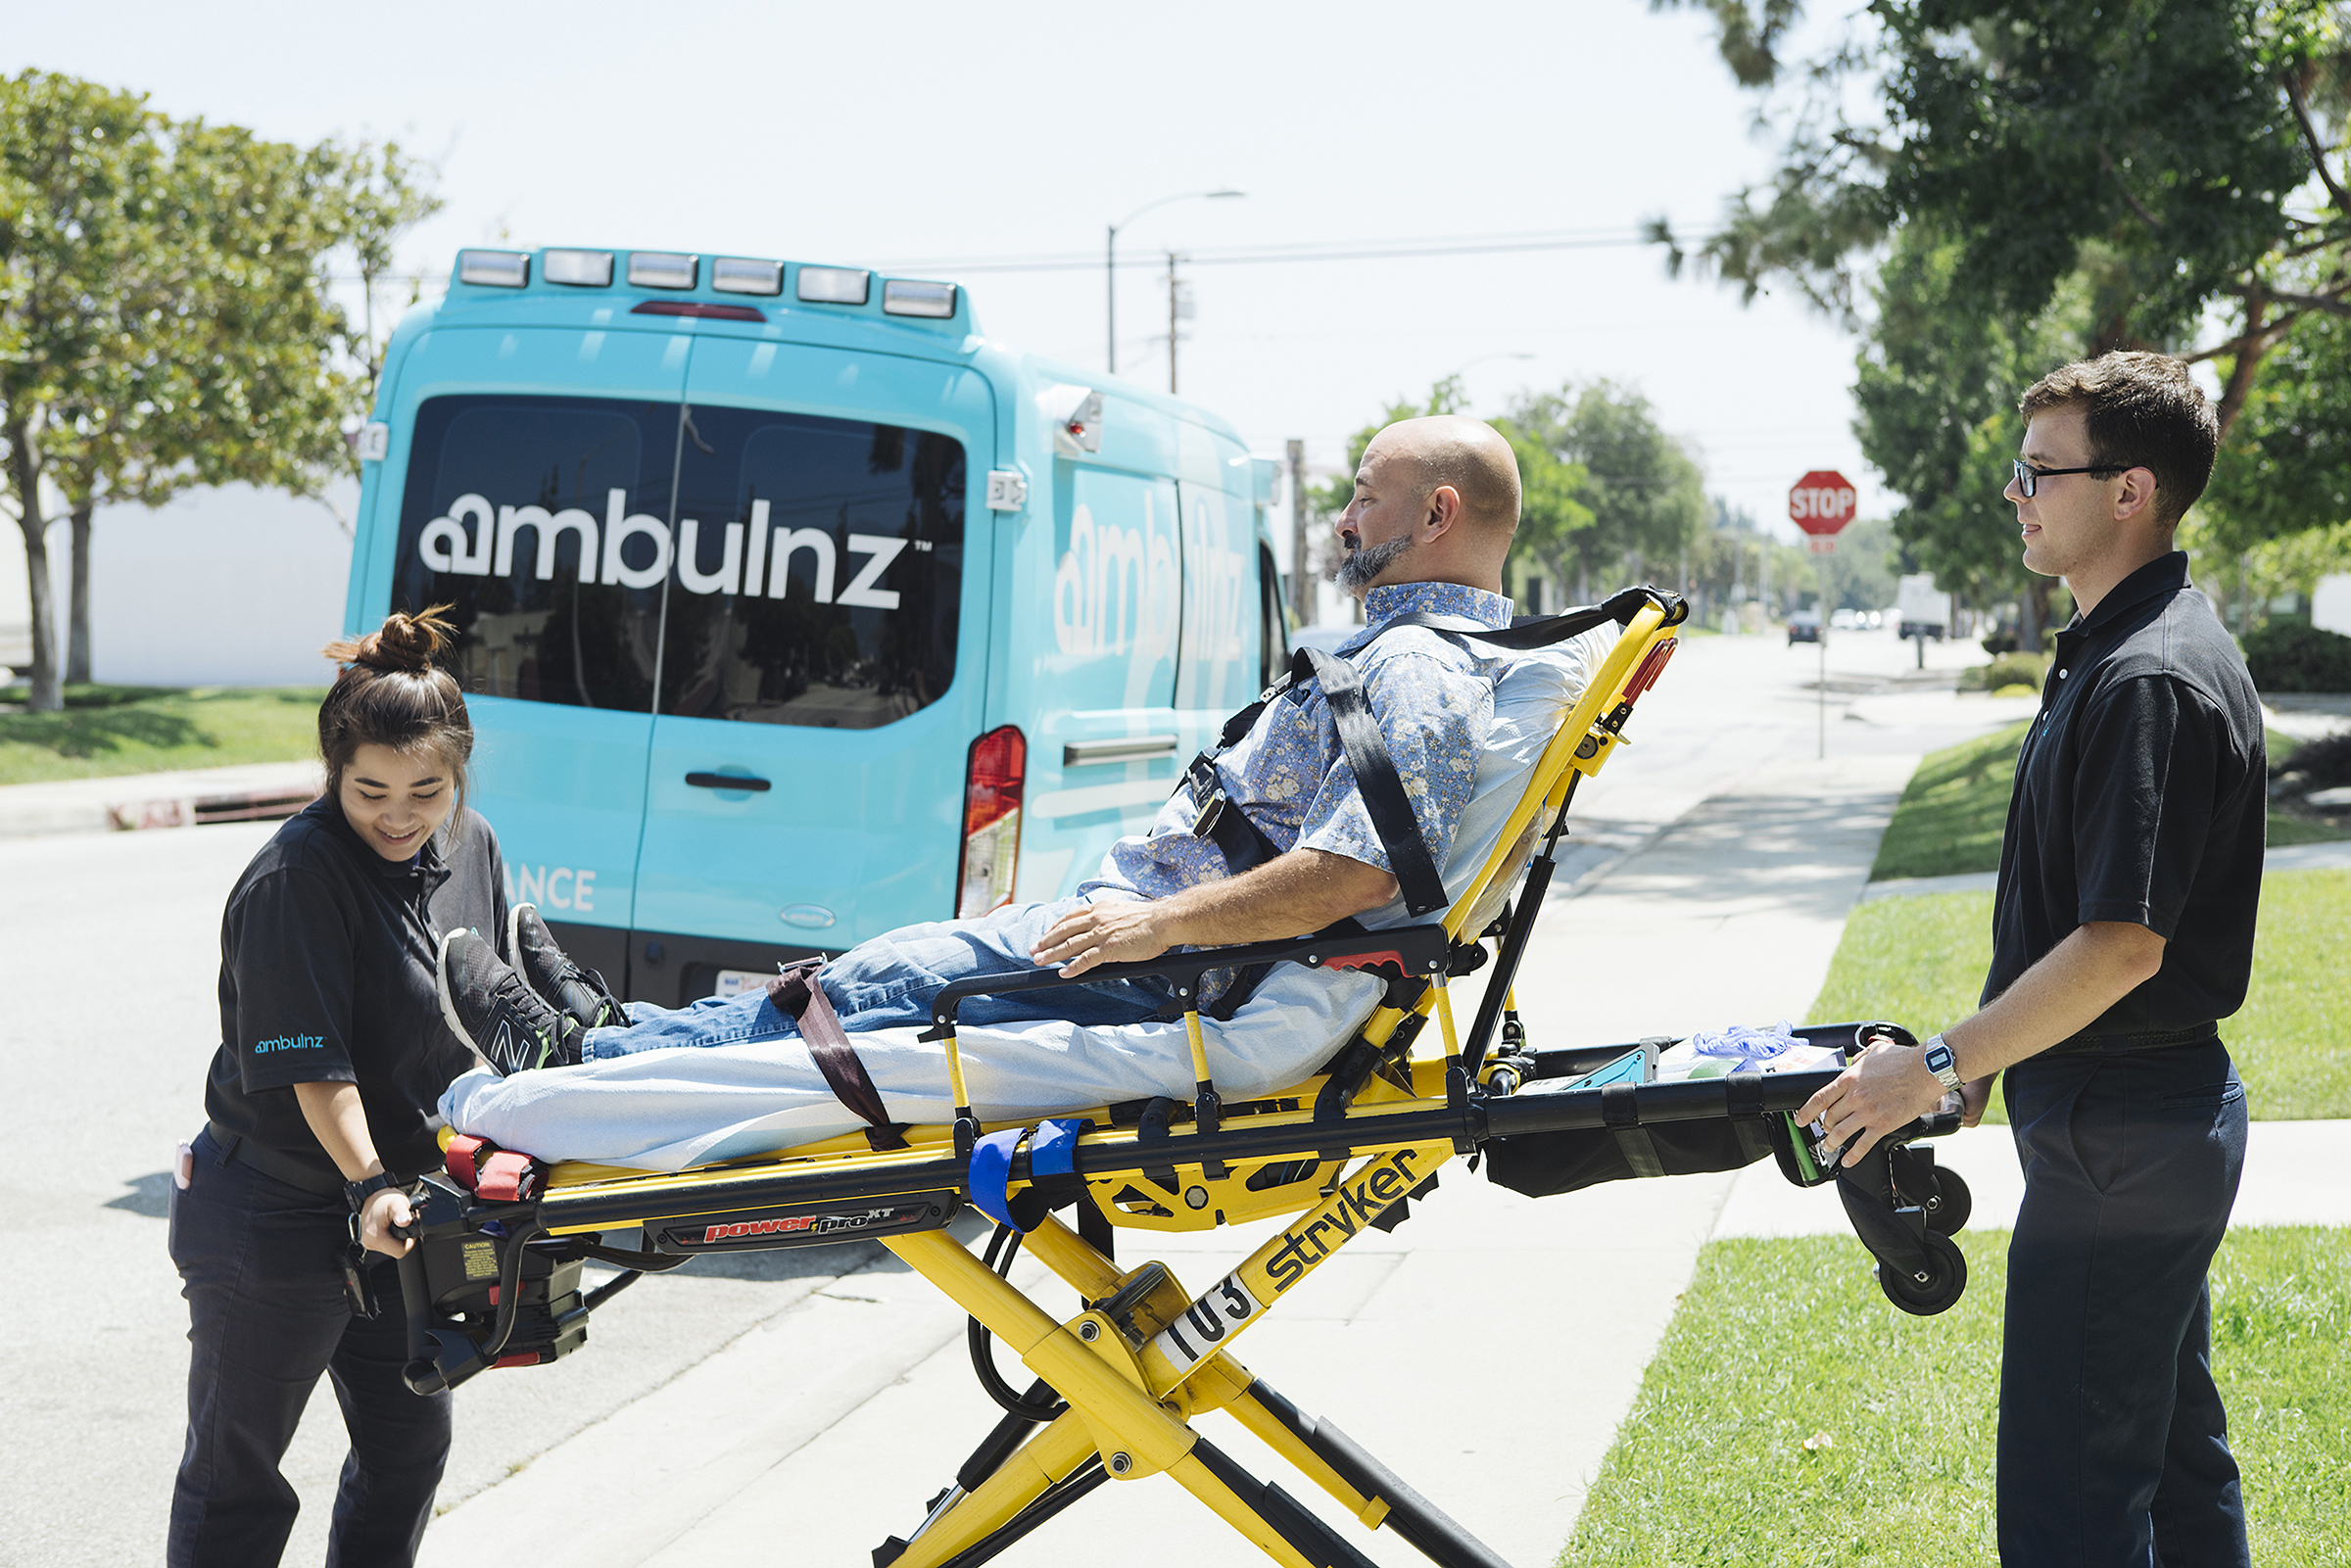 An Ambulnz medical transportation vehicle